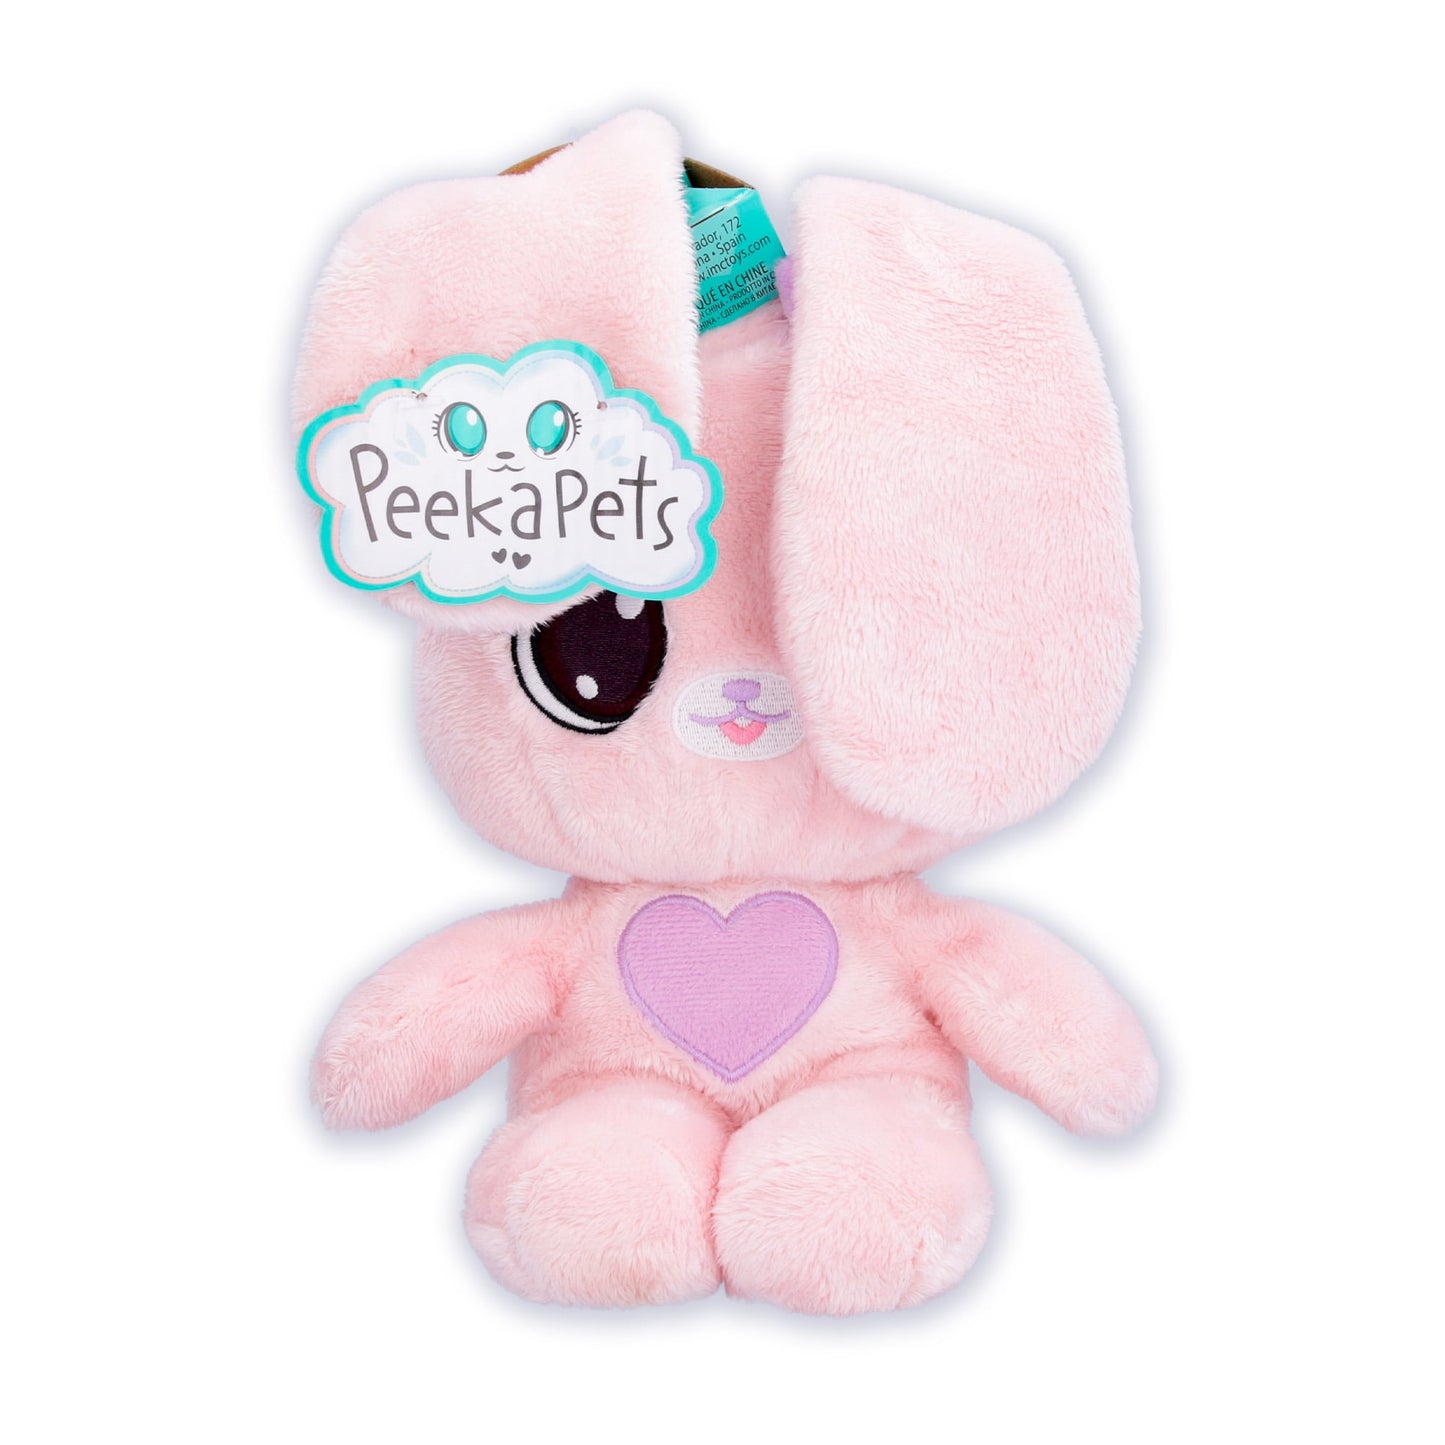 Peekapets Peek-A-Boo- Bunny Pink Plush - Stuffed Animal, Plush Doll - Great Gift for Kids Ages 1-3